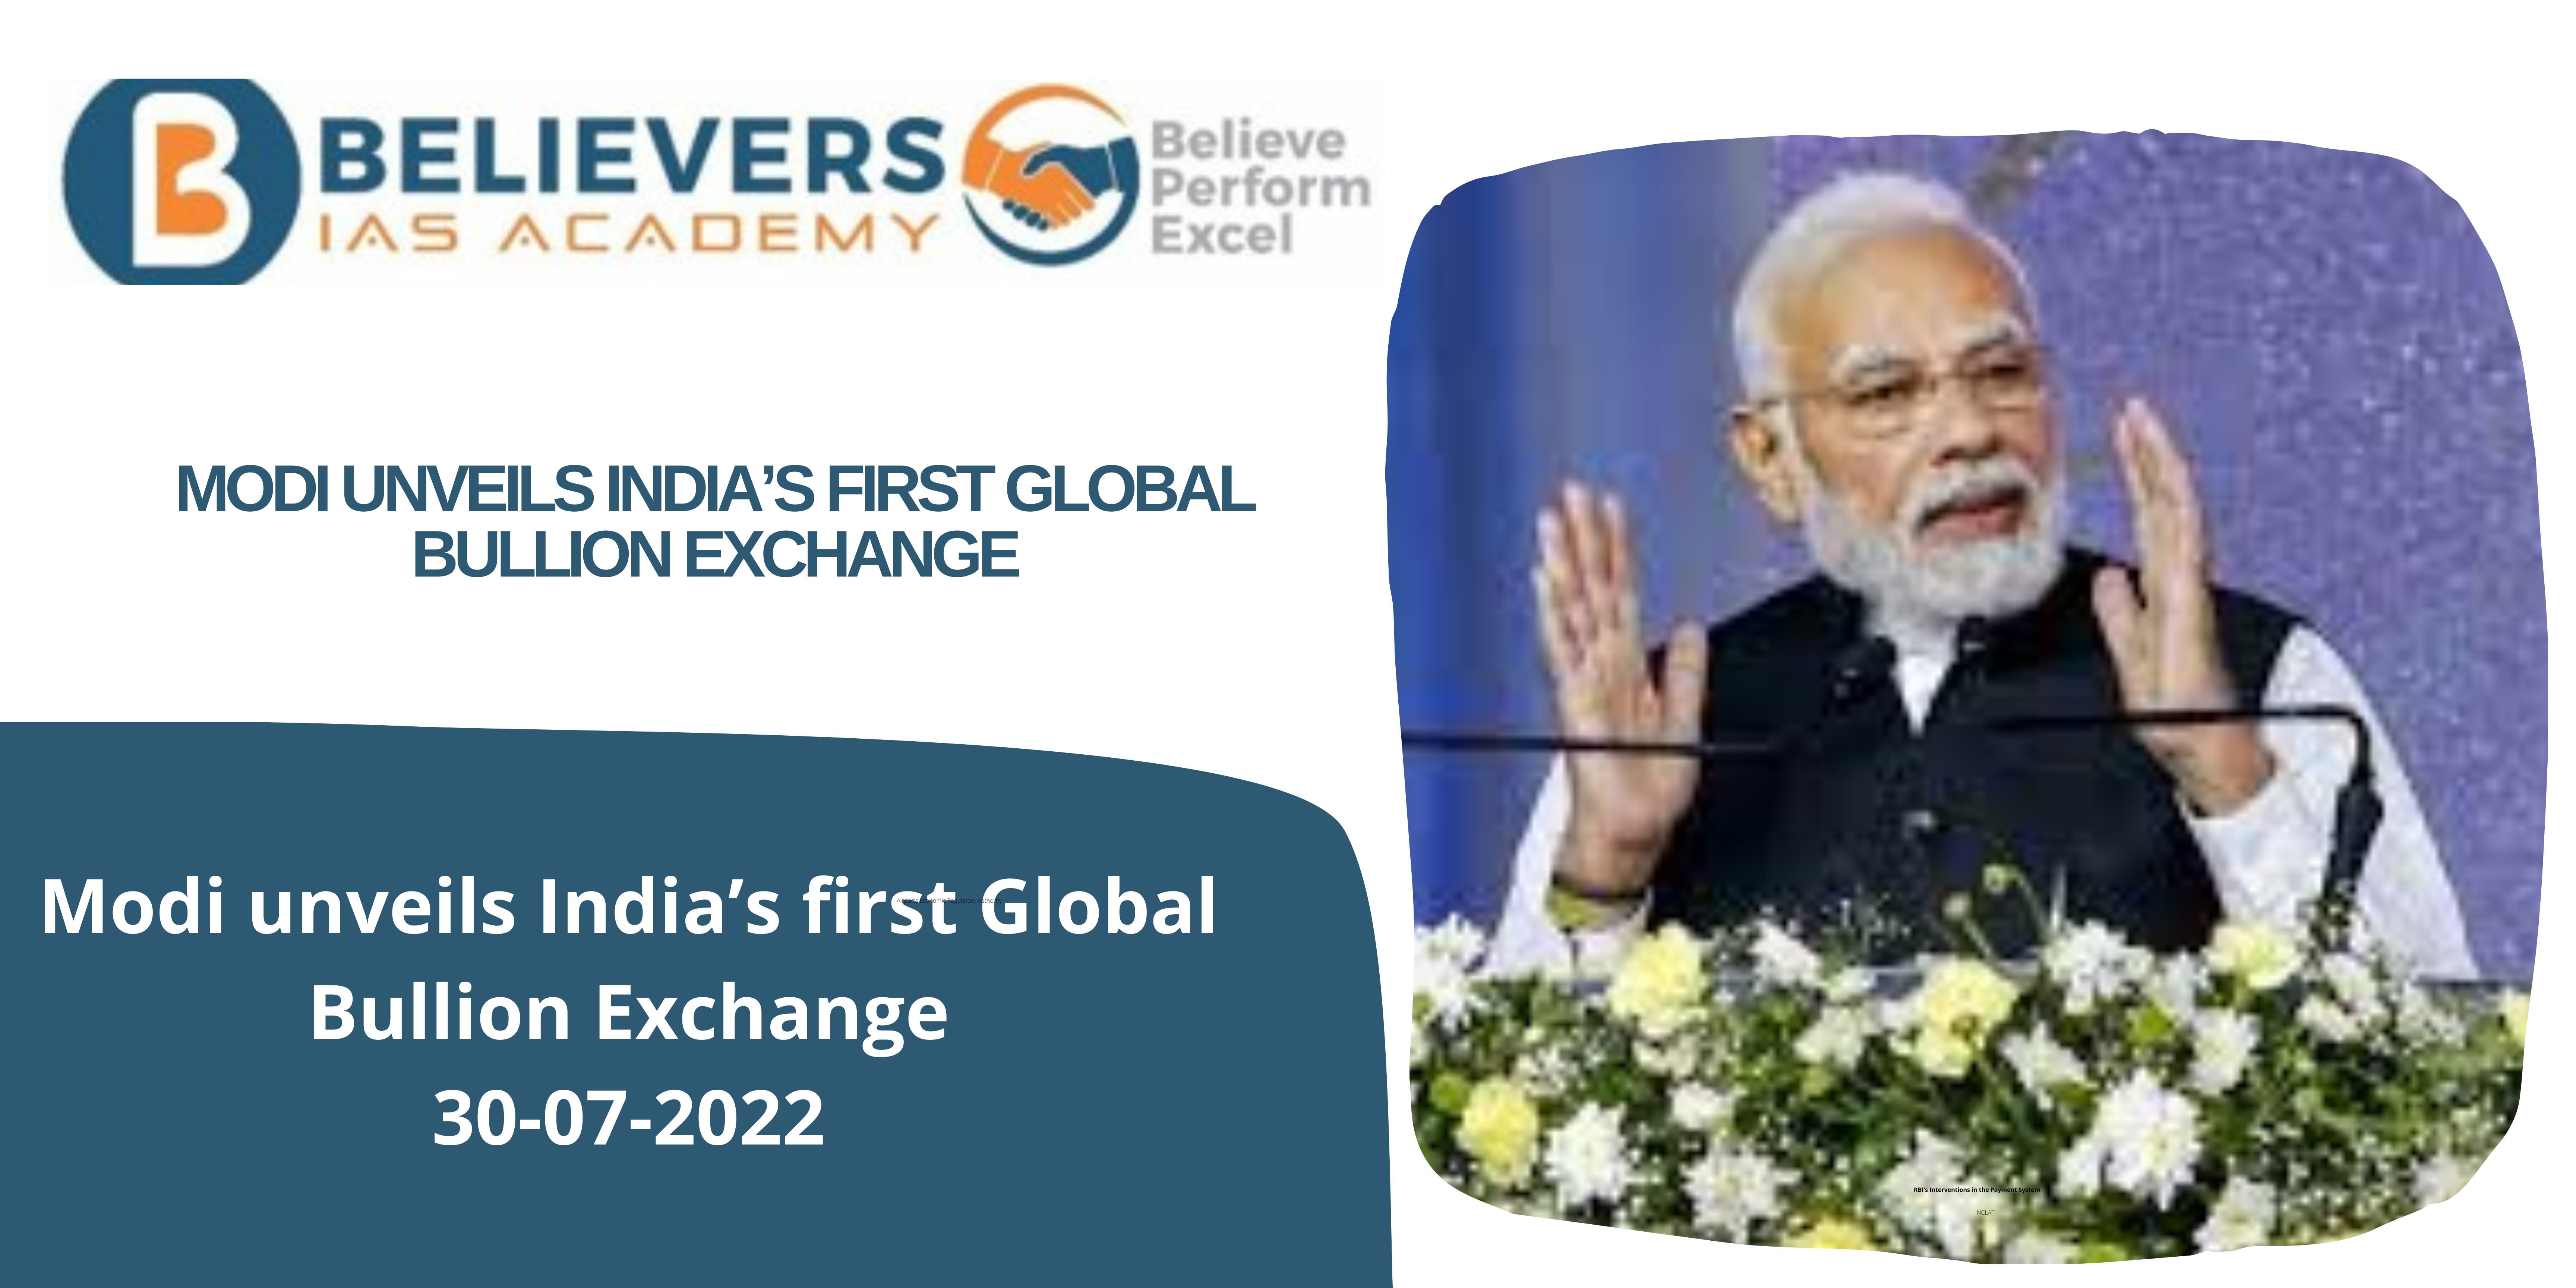 IAS Current affairs - Modi unveils India’s first Global Bullion Exchange